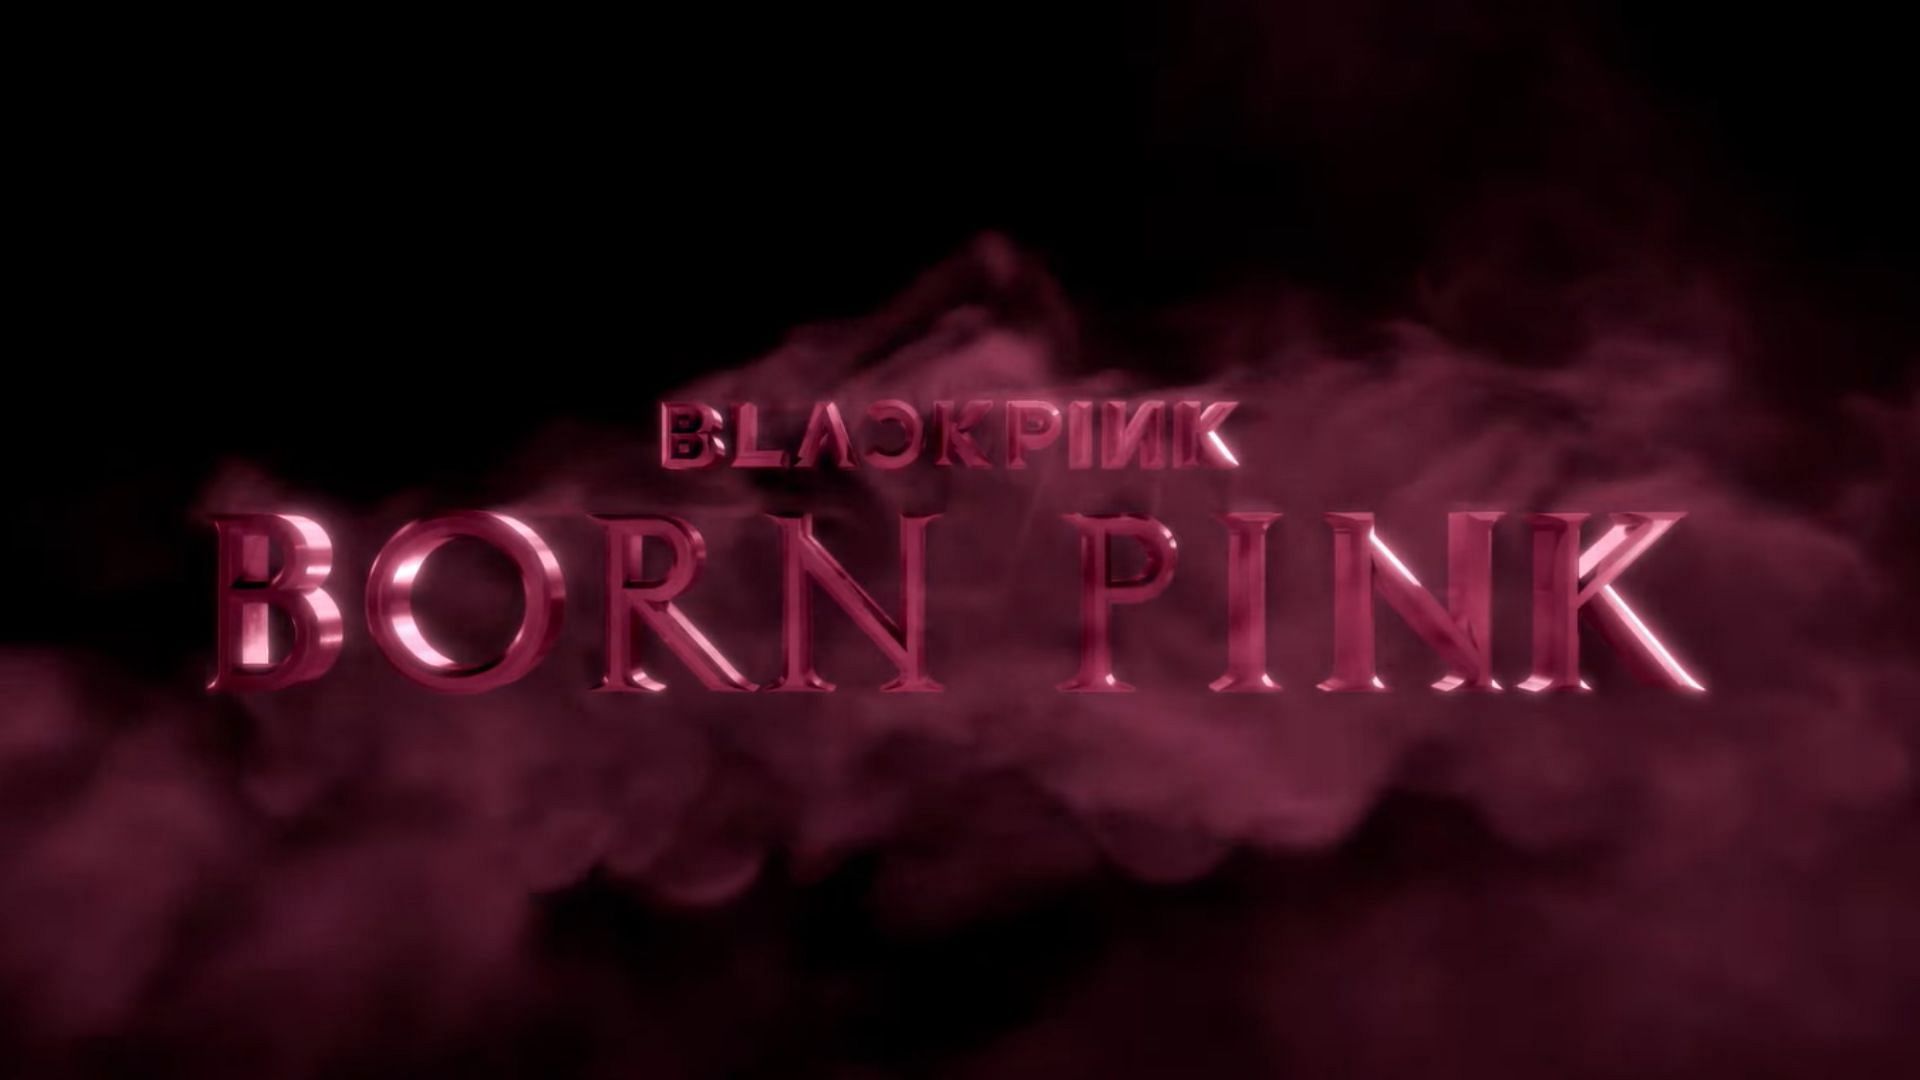 Blackpink unveils tracklist of its upcoming album 'Born Pink